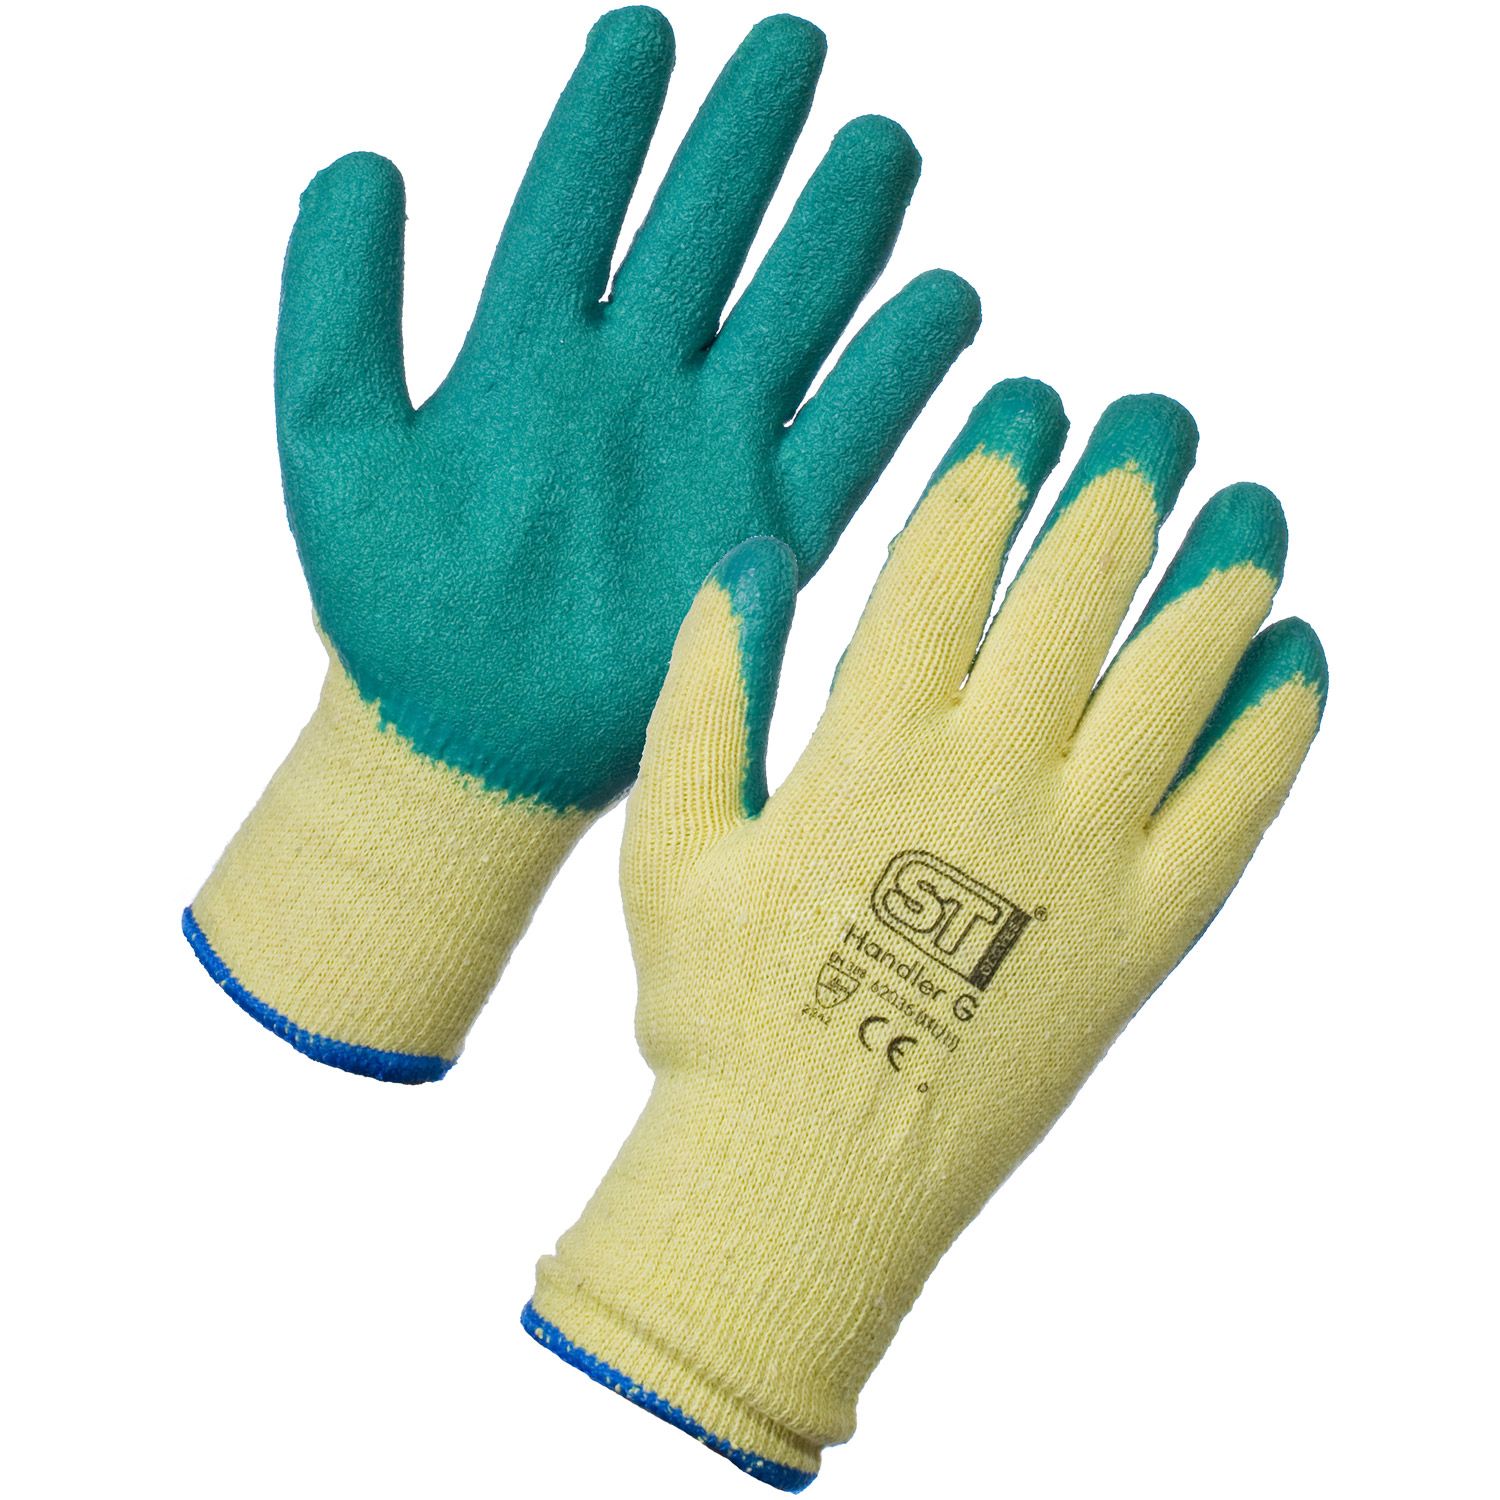 General Handler Glove - XL - 12 Pack